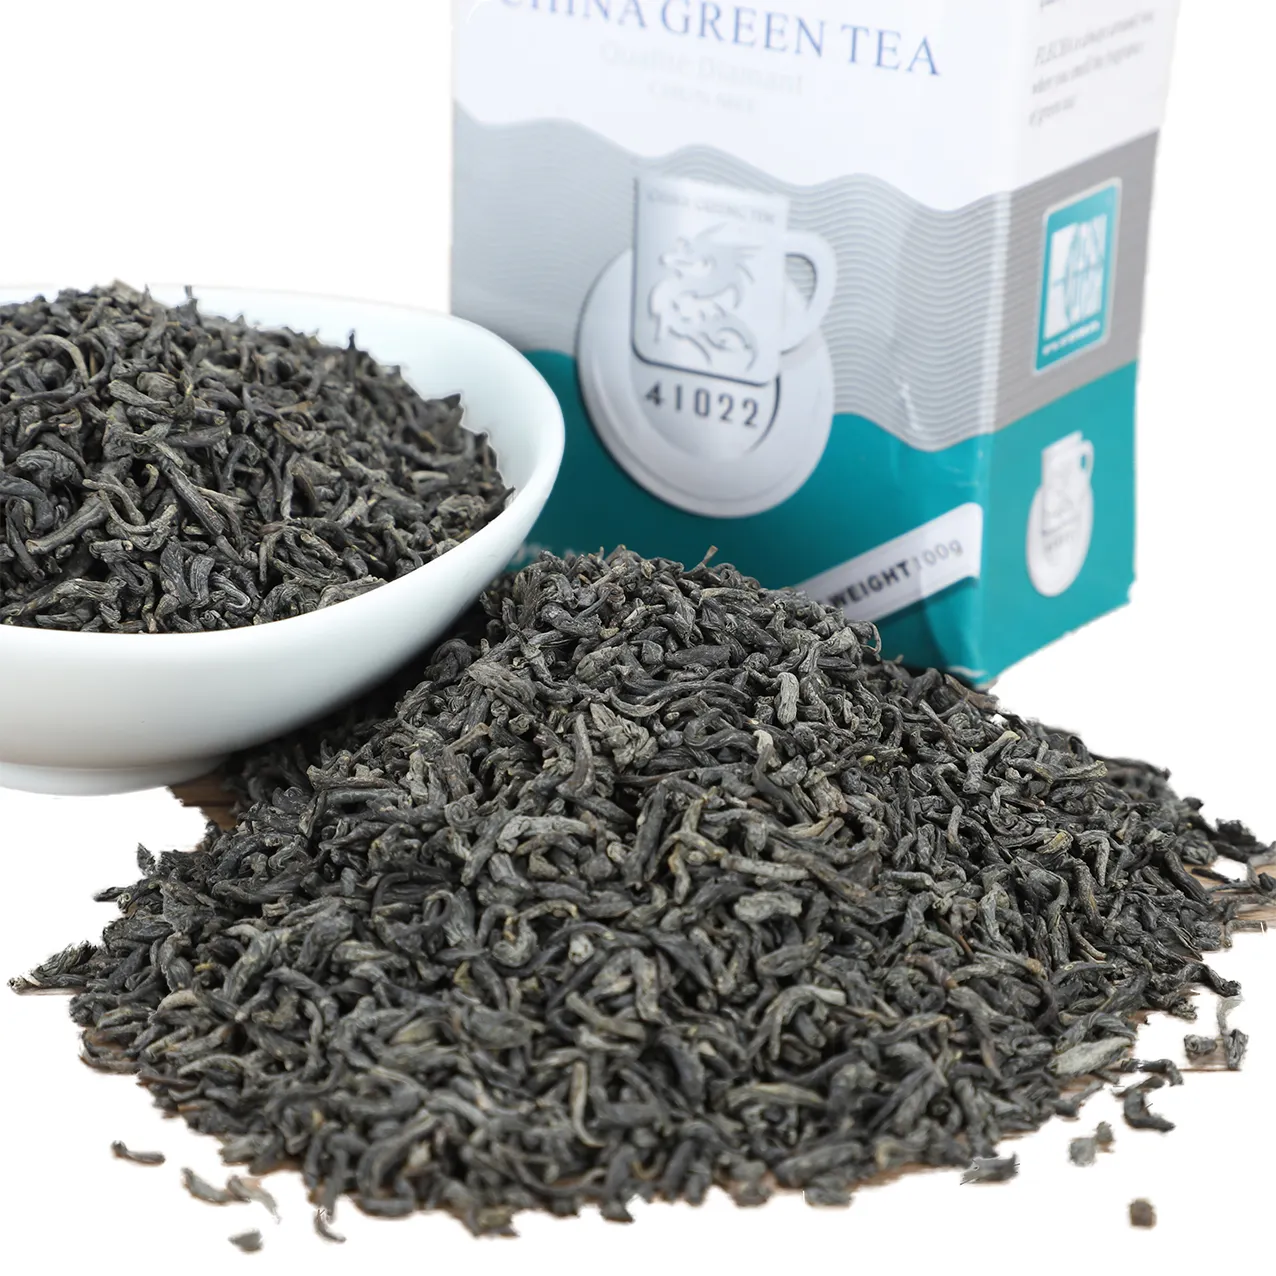 Оптовая продажа с завода, лучший аромат и вкус, зеленый чай chunmee the vert 4011,41022, 9371